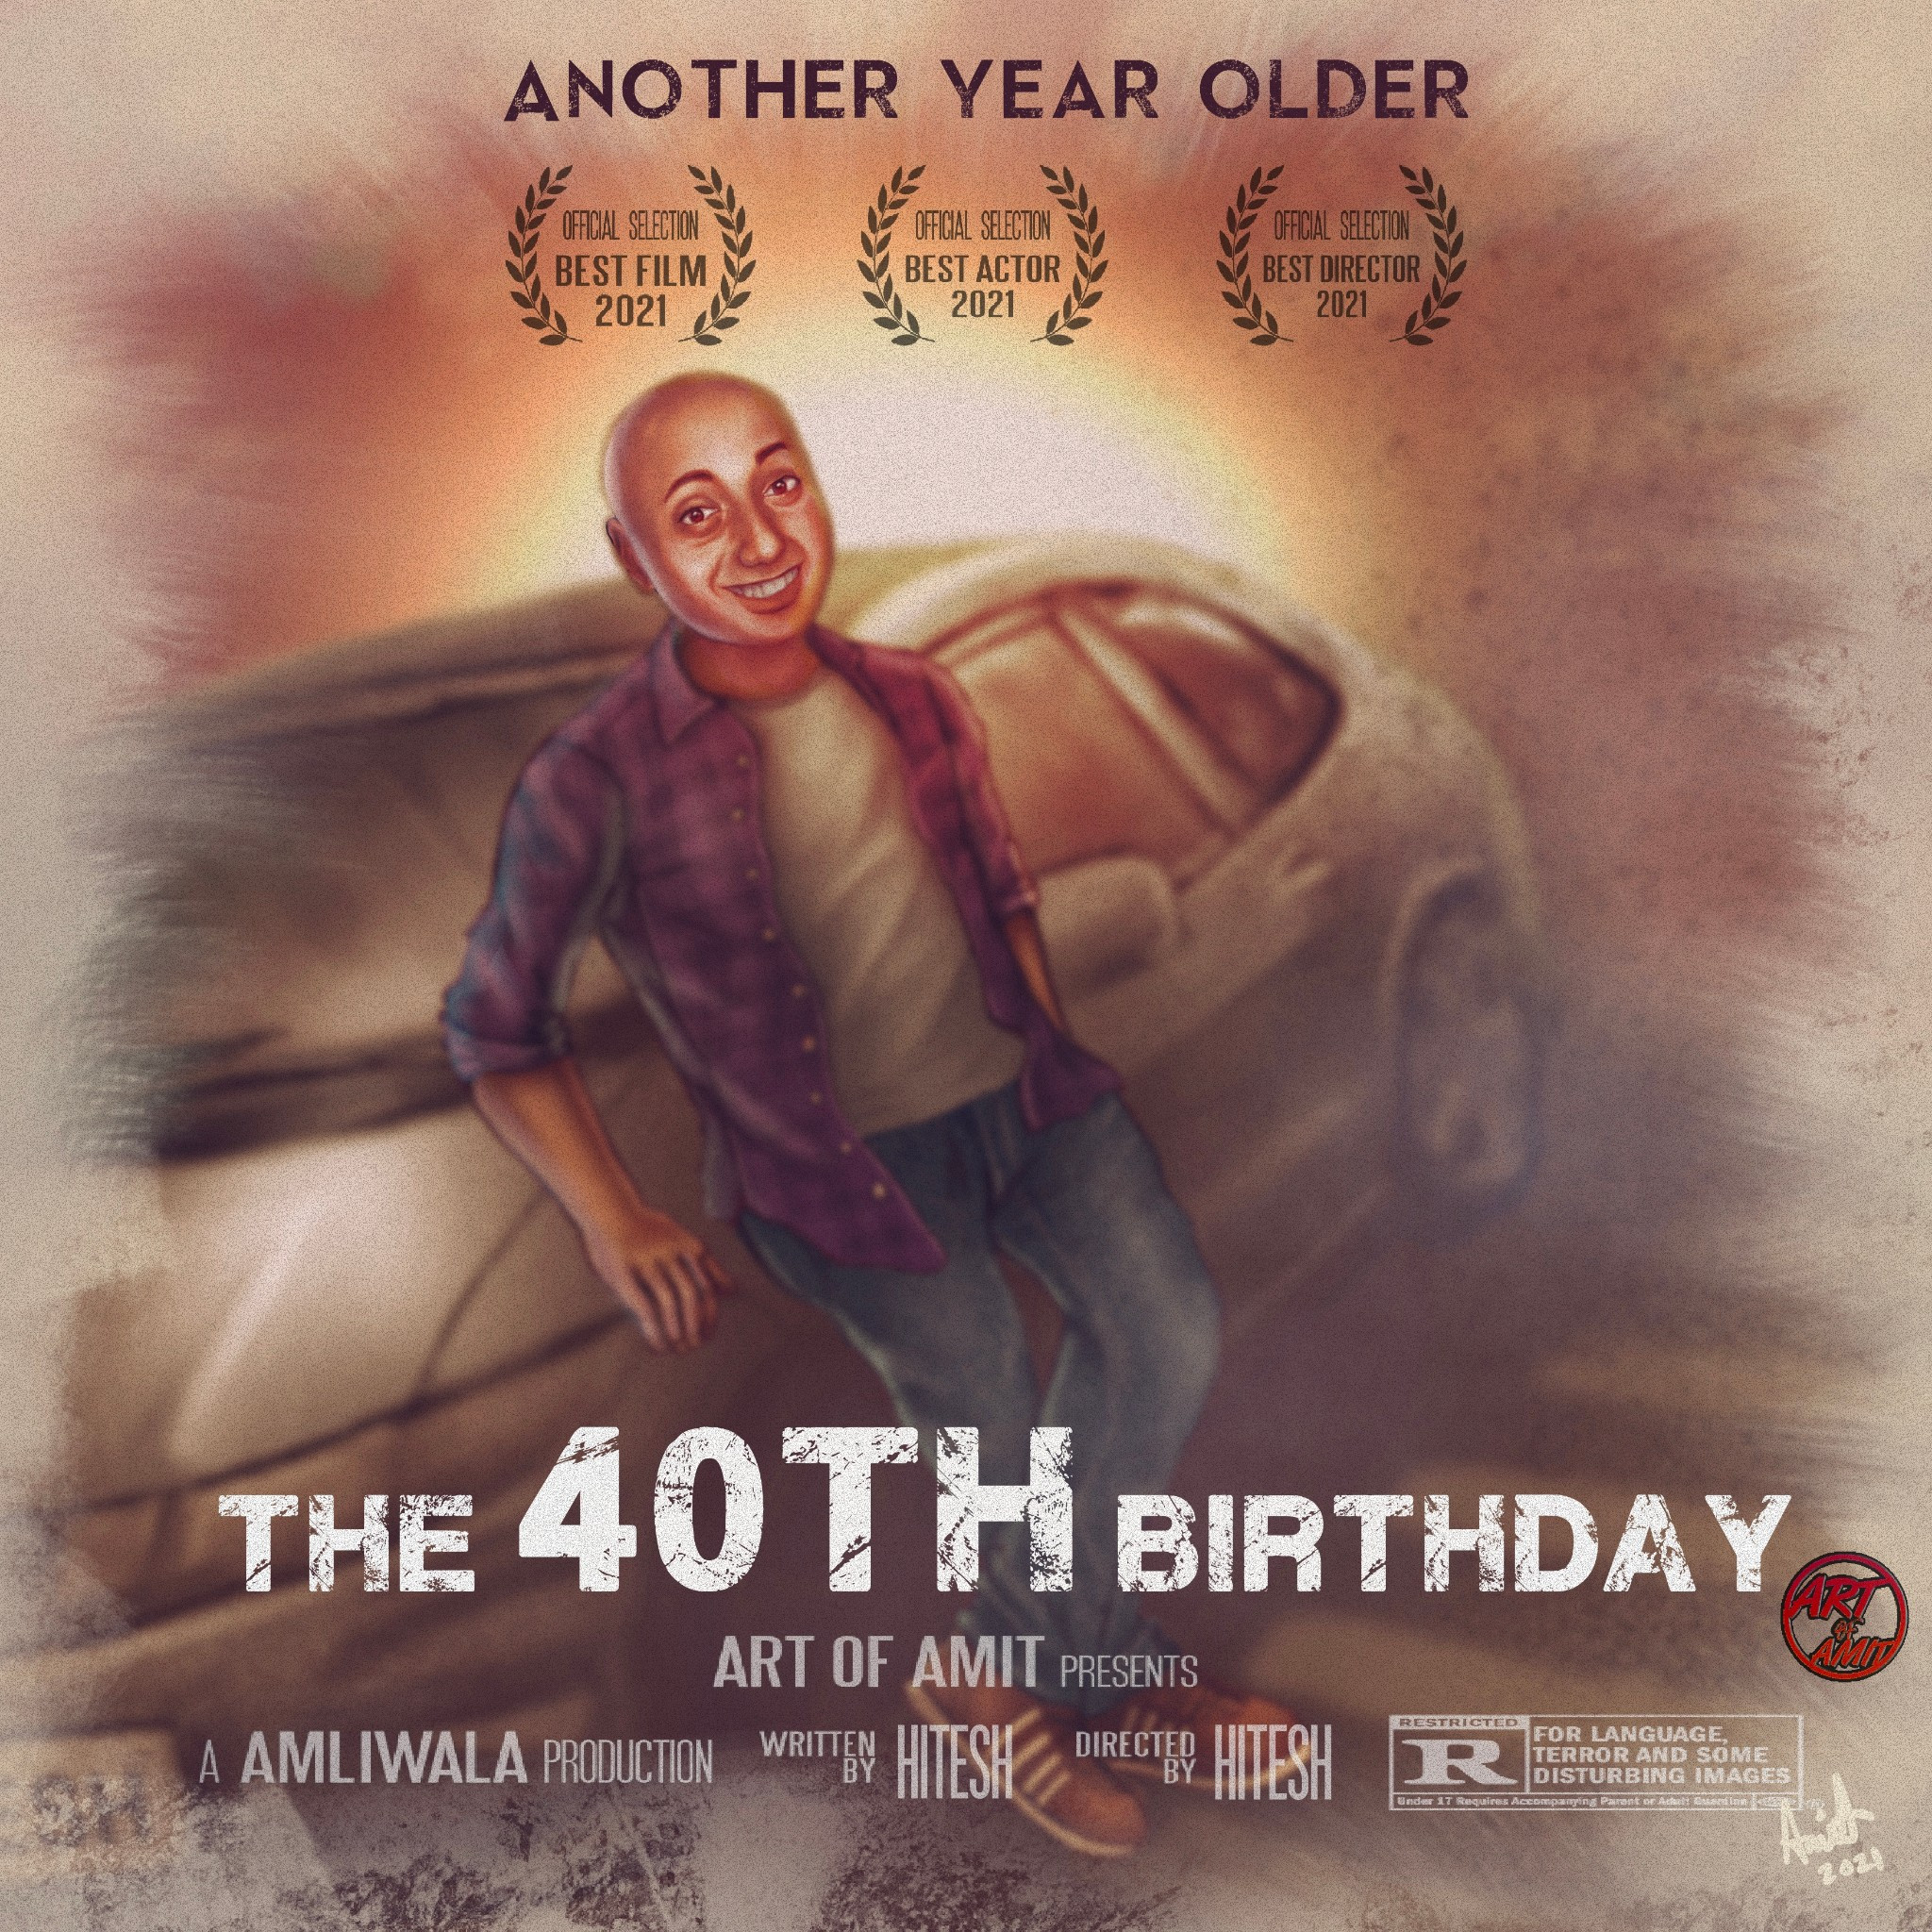 The 40th Birthday